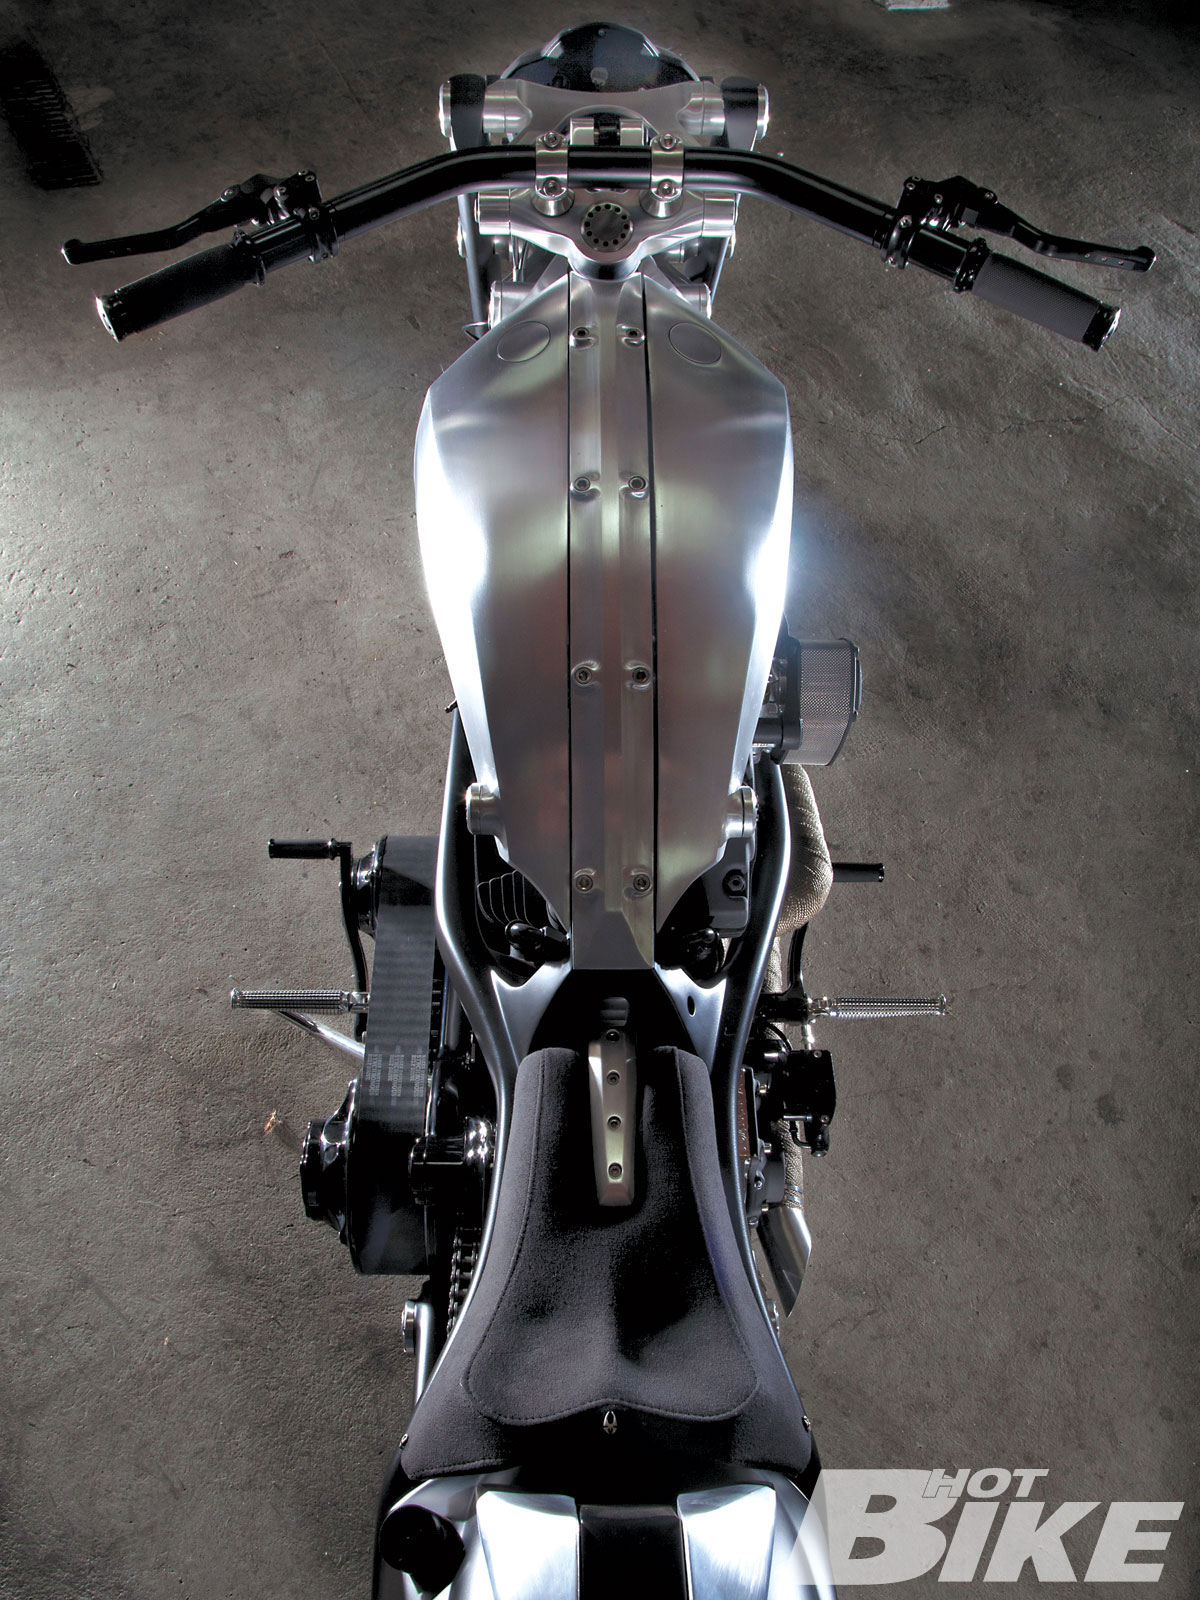 The New Pro Street | 2012 Harley Davidson Hardtail 18 - Hot Bike Magazine